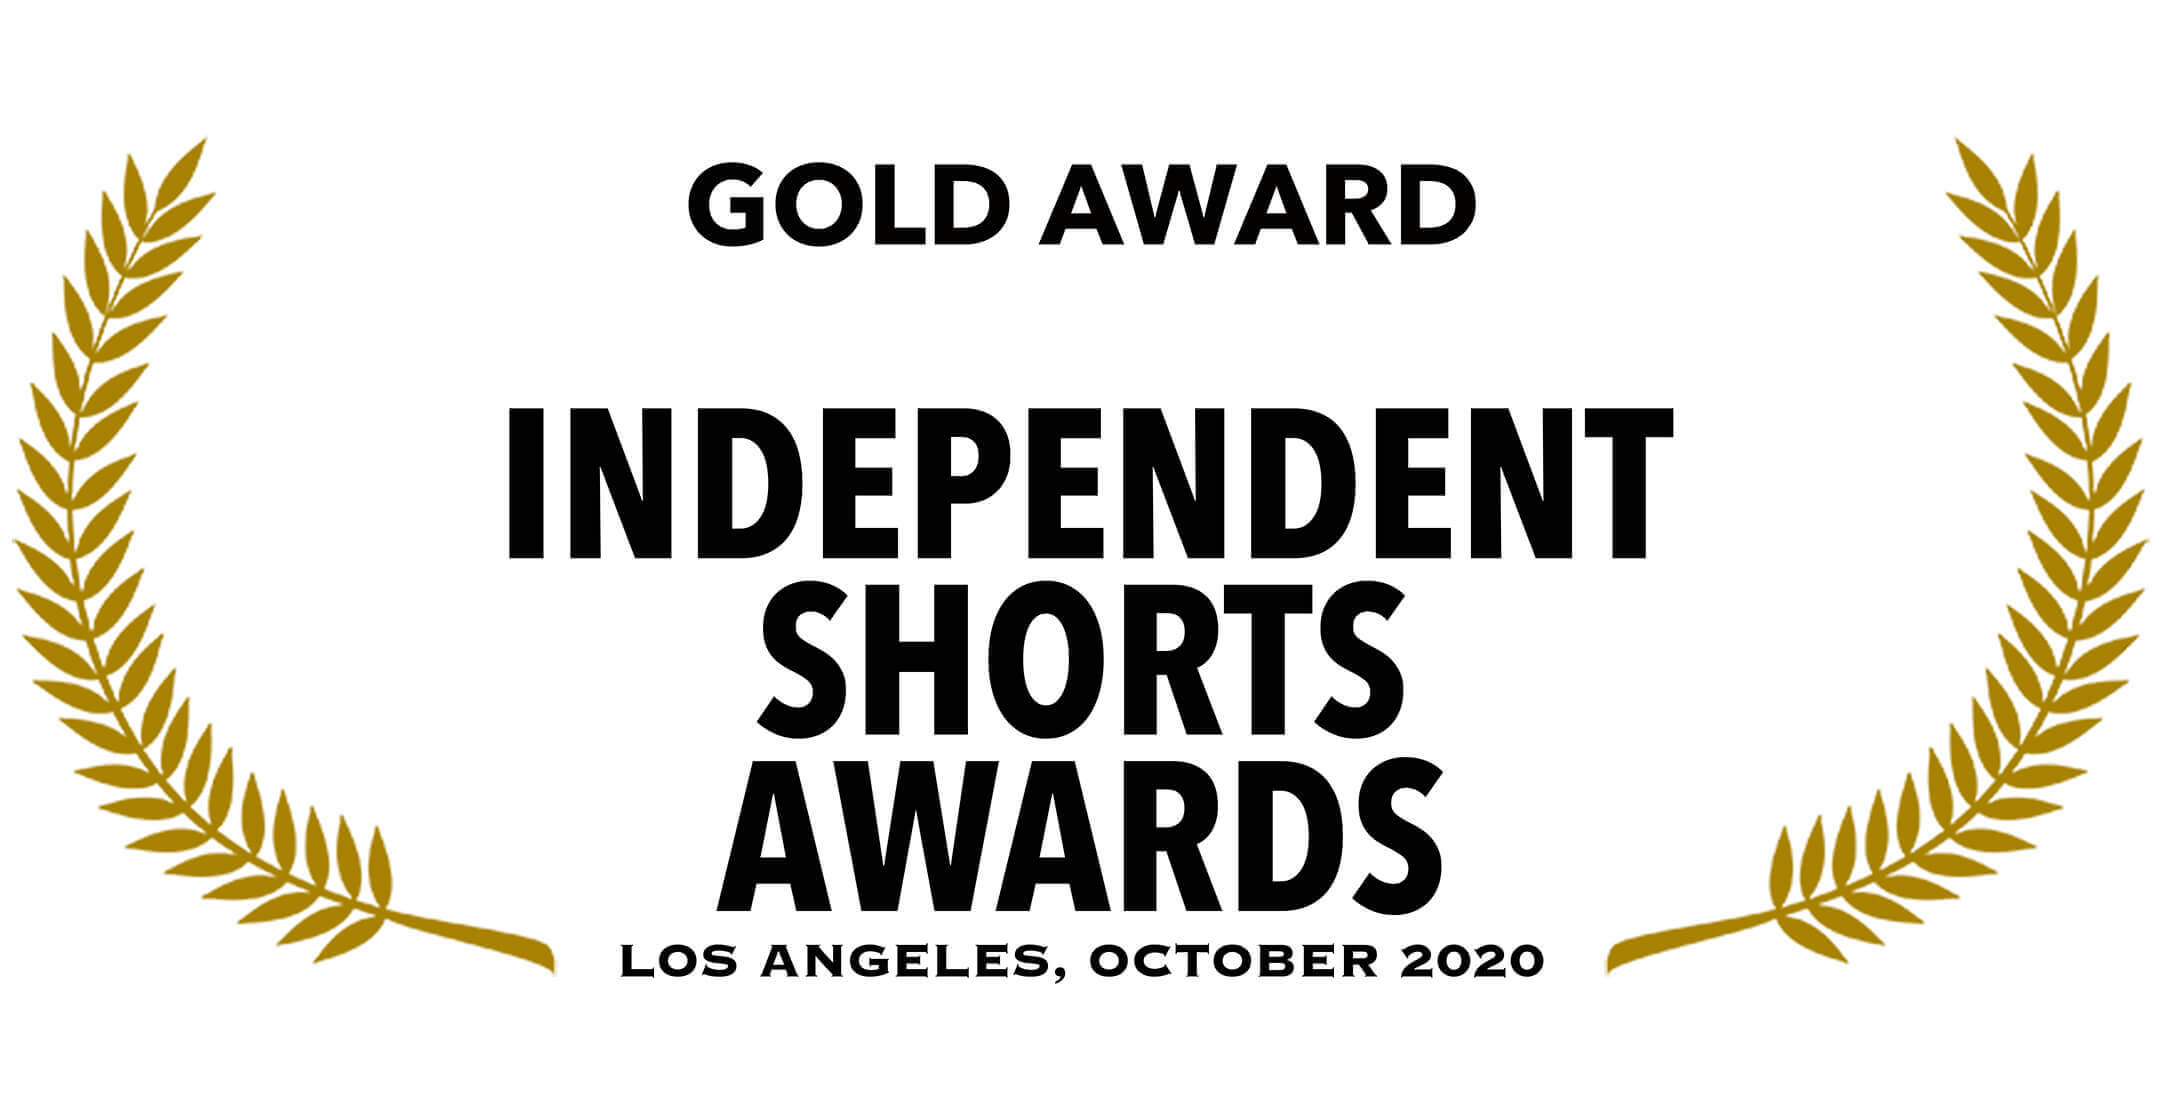 GOLD AWARD - INDEPENDENT SHORTS AWARDS LOS ANGELES OCTOBER 2020